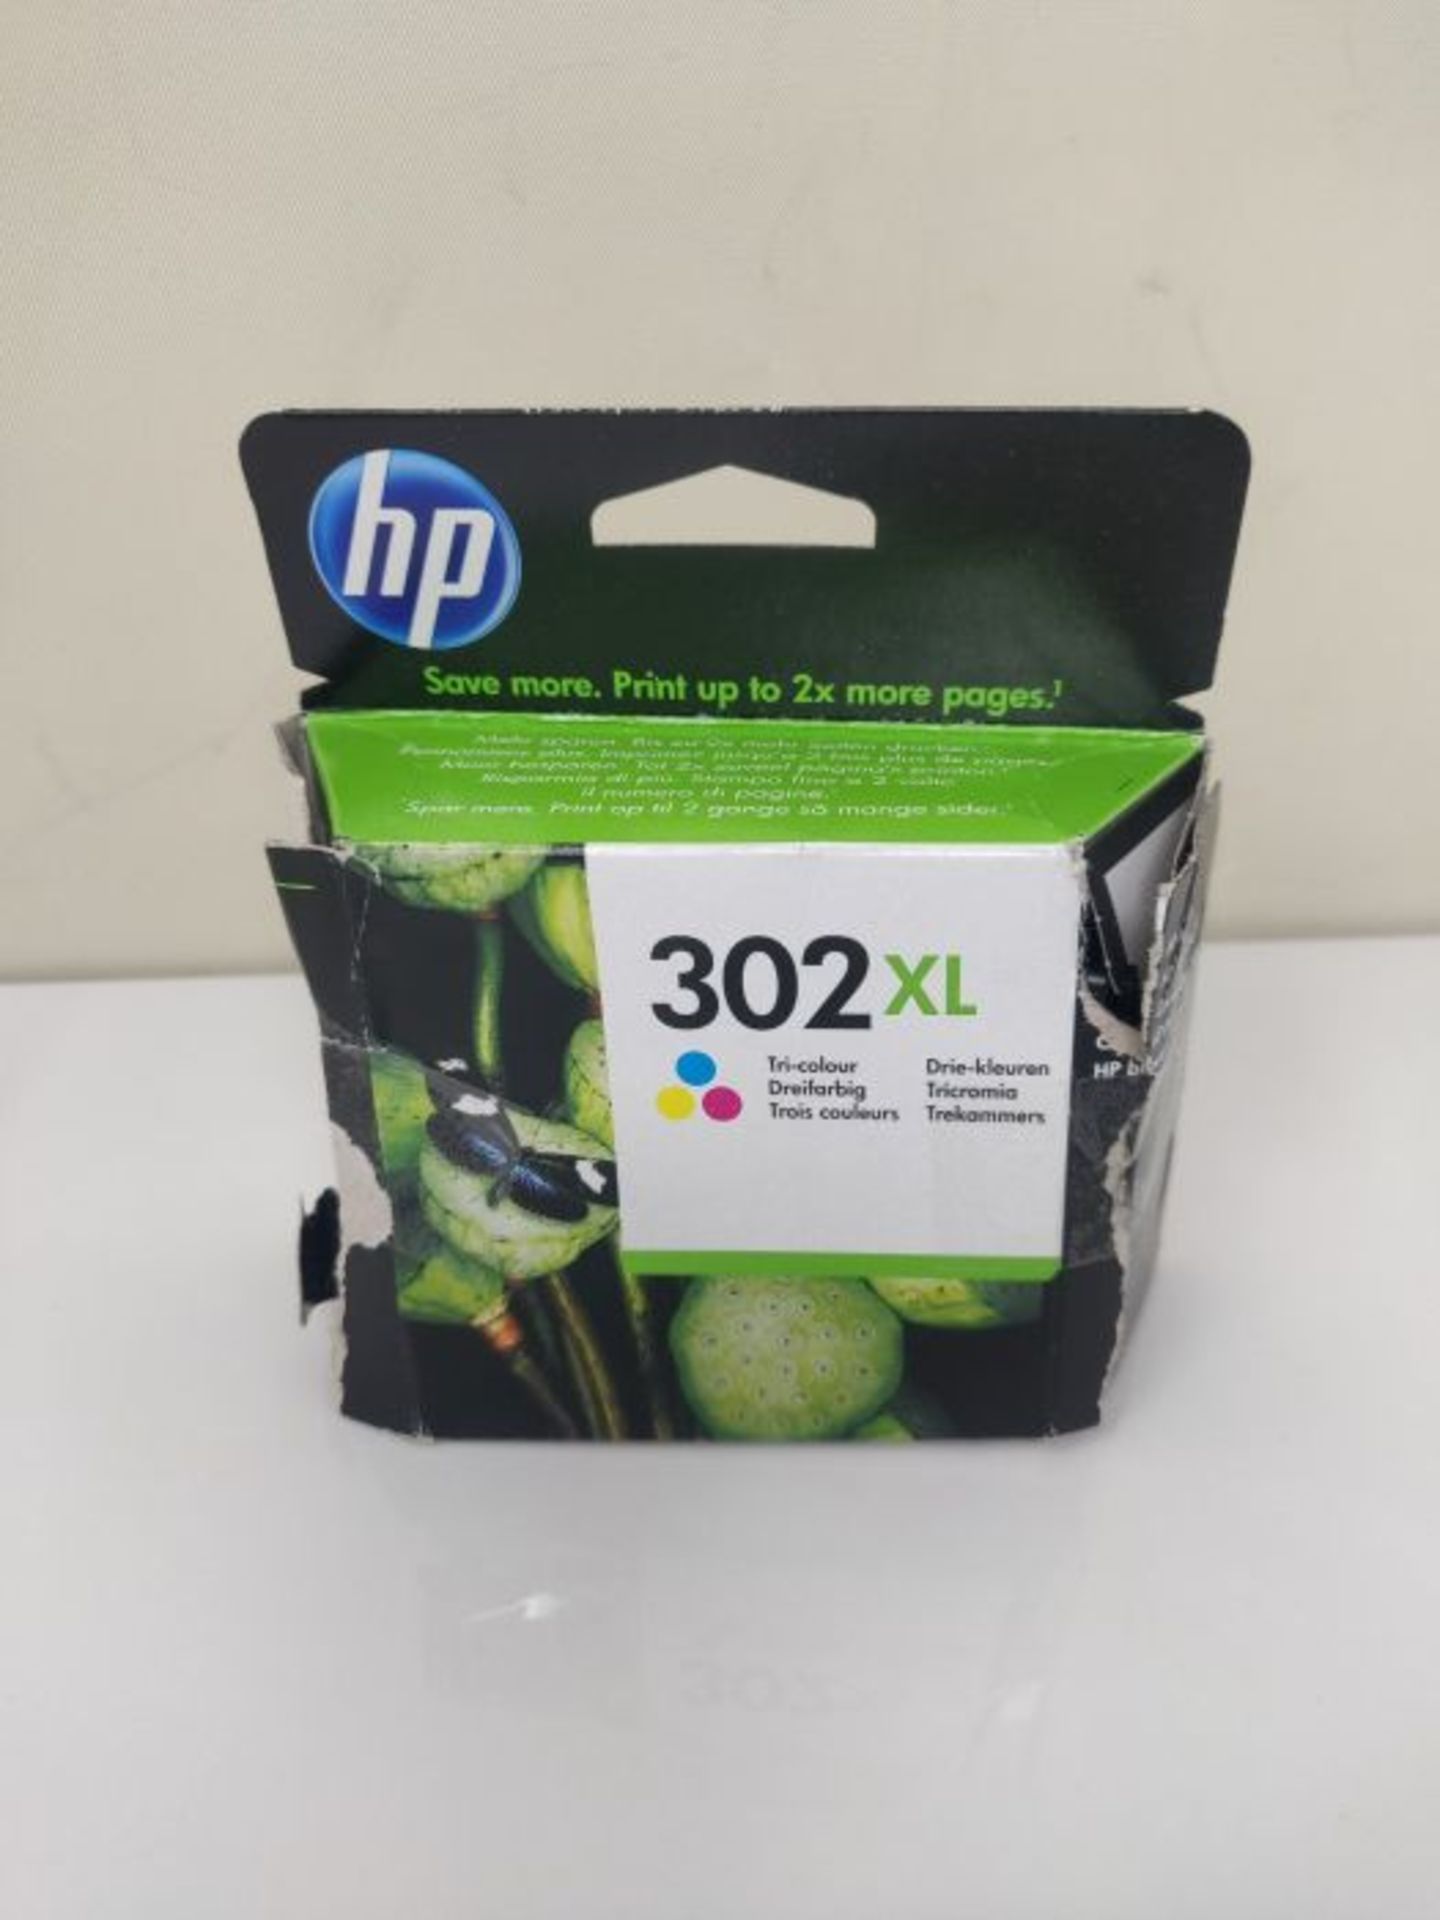 HP F6U67AE 302XL High Yield Original Ink Cartridge, Tri-color, Single Pack - Image 2 of 3